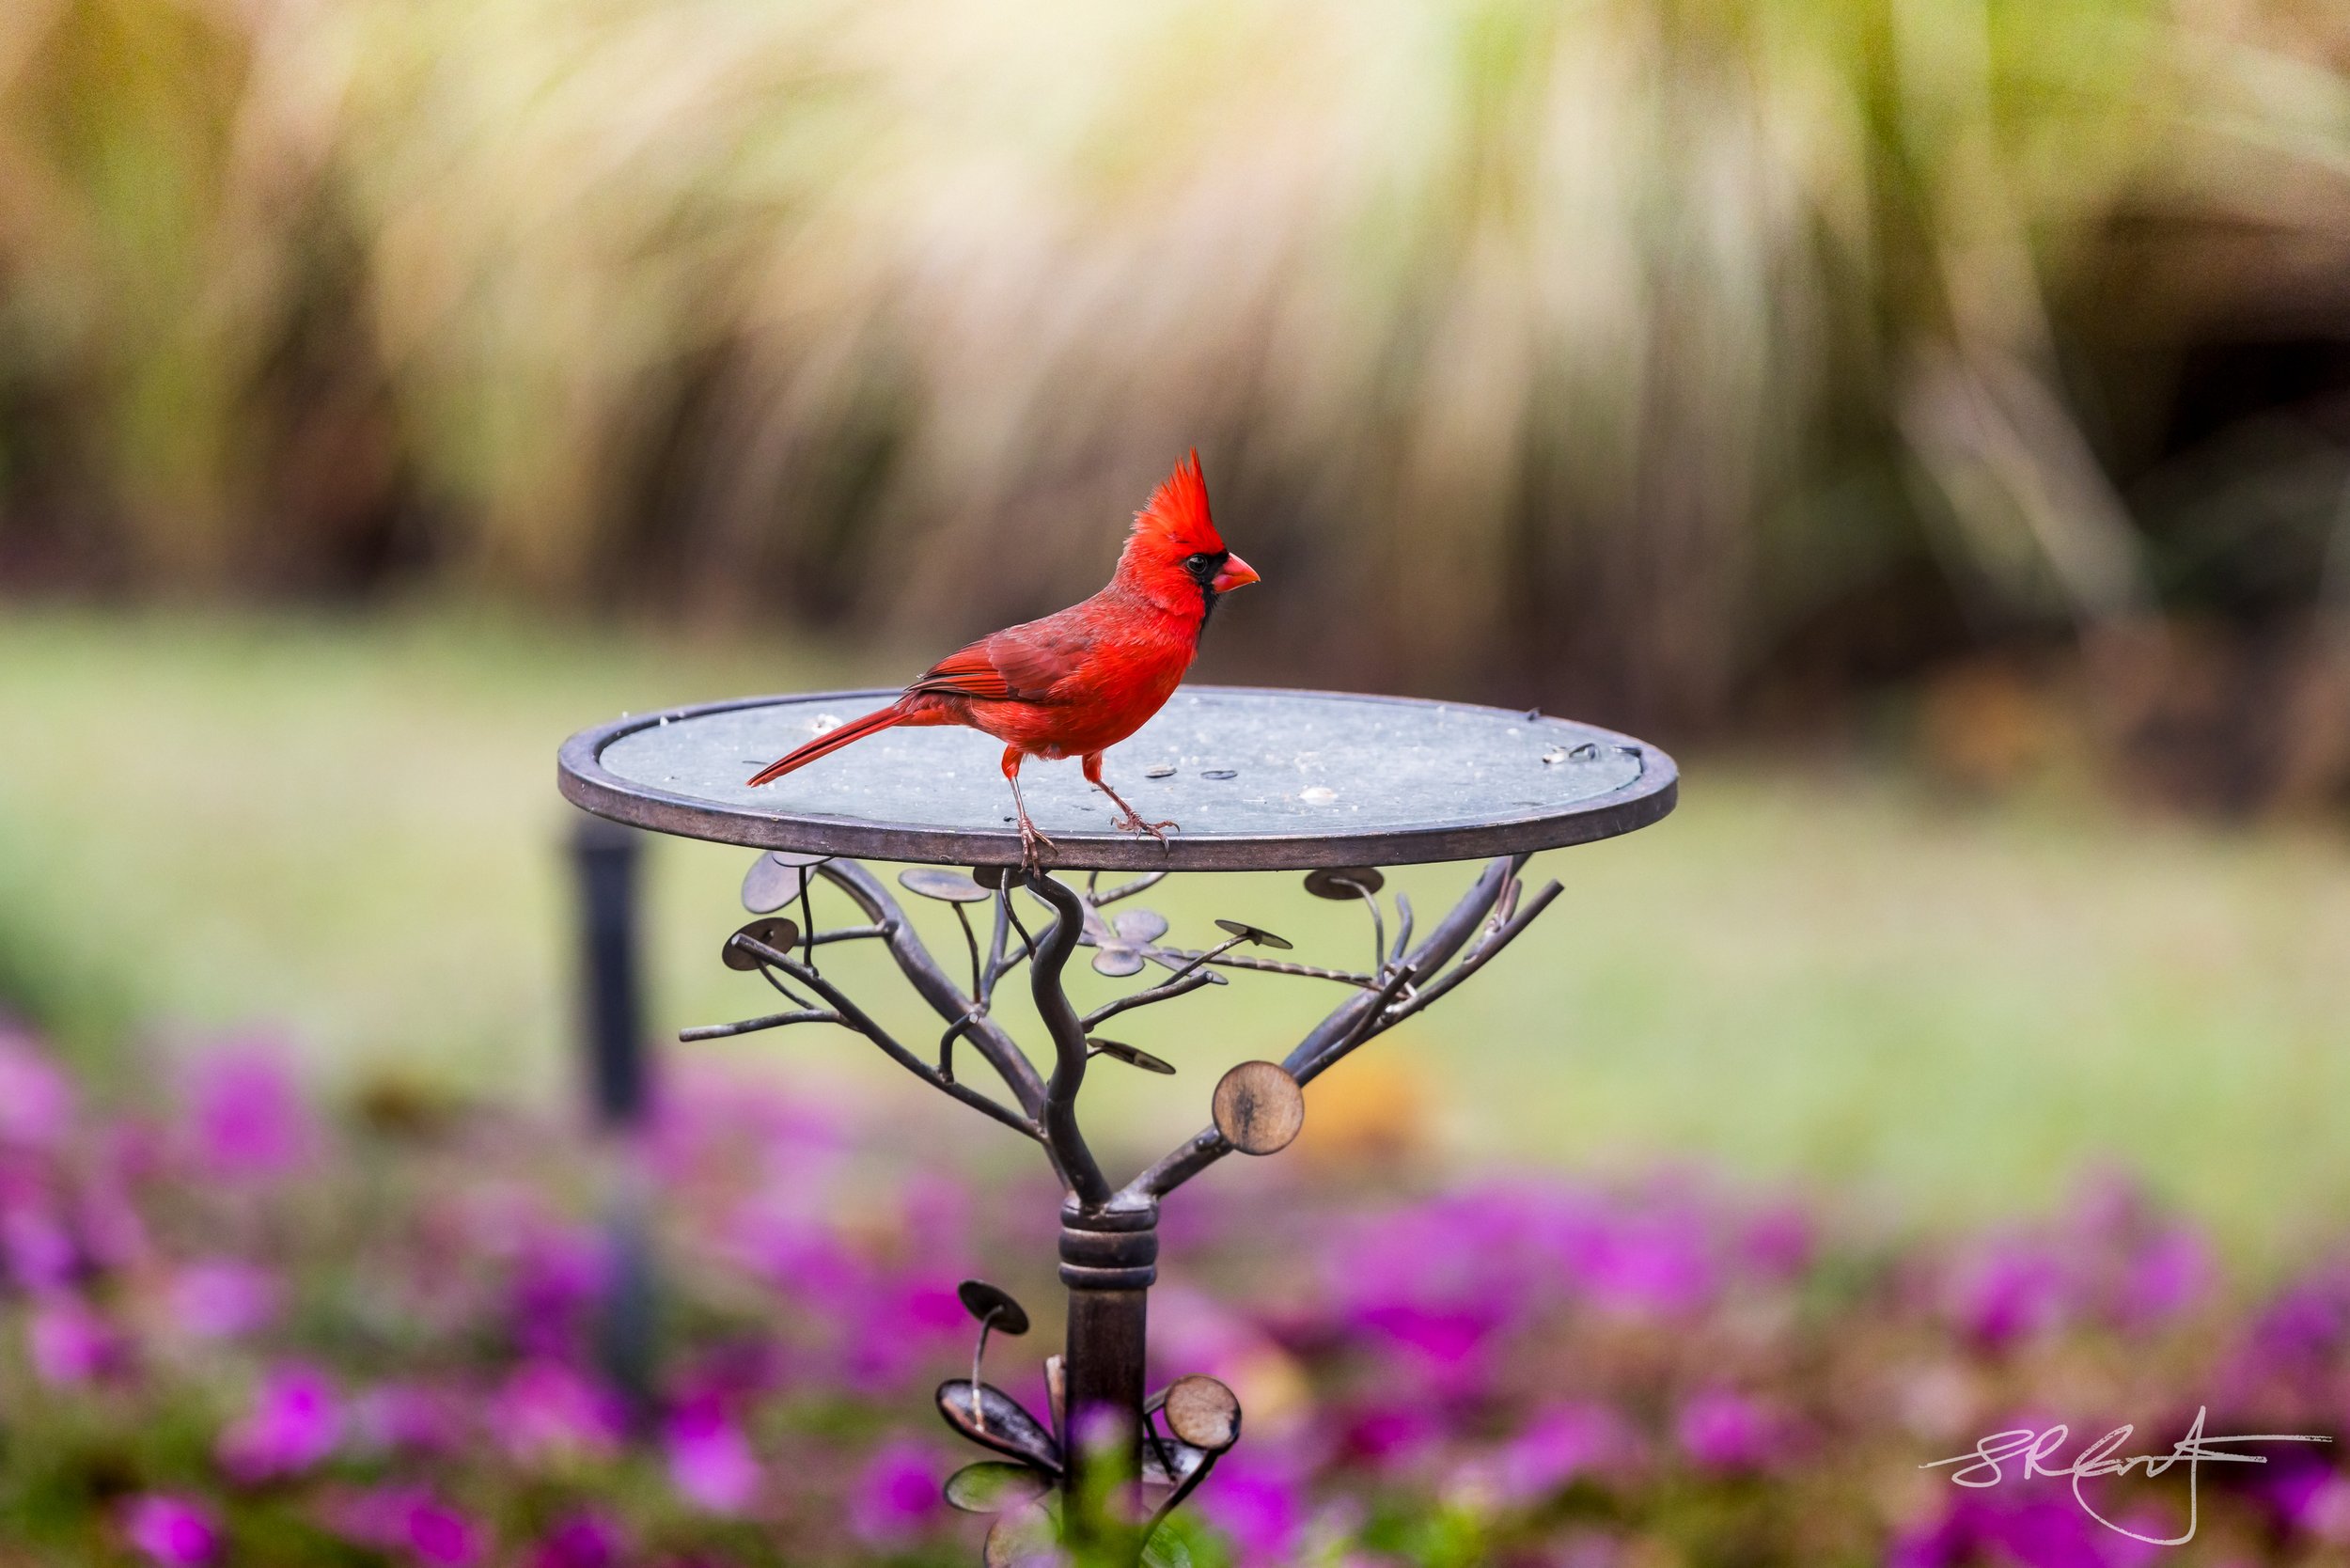 Male Cardinal at feeding platform